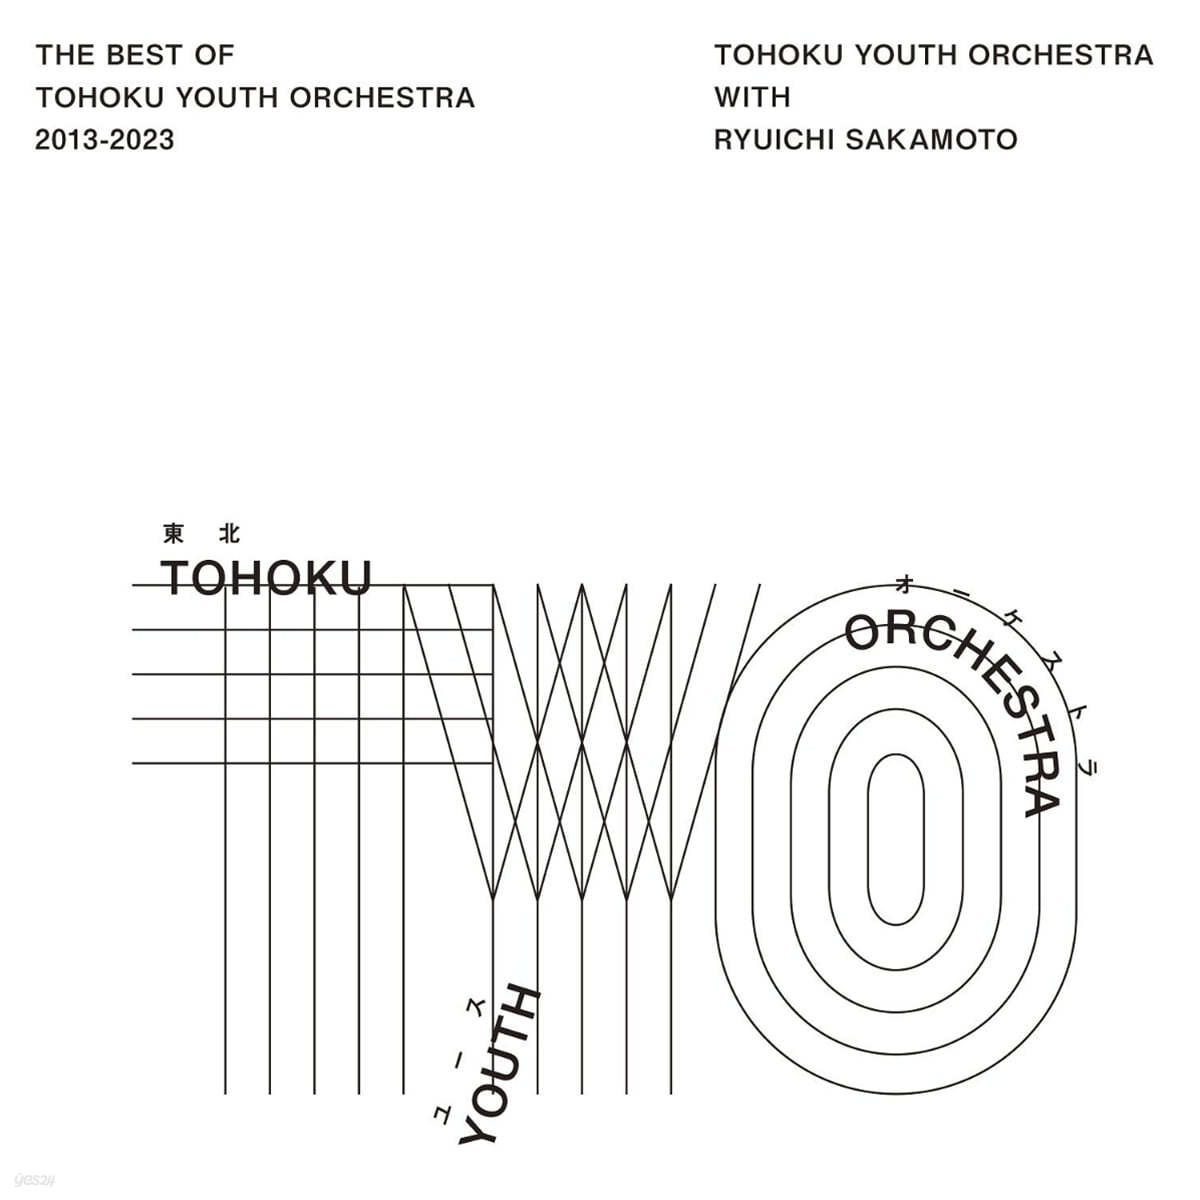 Ryuichi Sakamoto (류이치 사카모토) - The Best of Tohoku Youth Orchestra 2013-2023